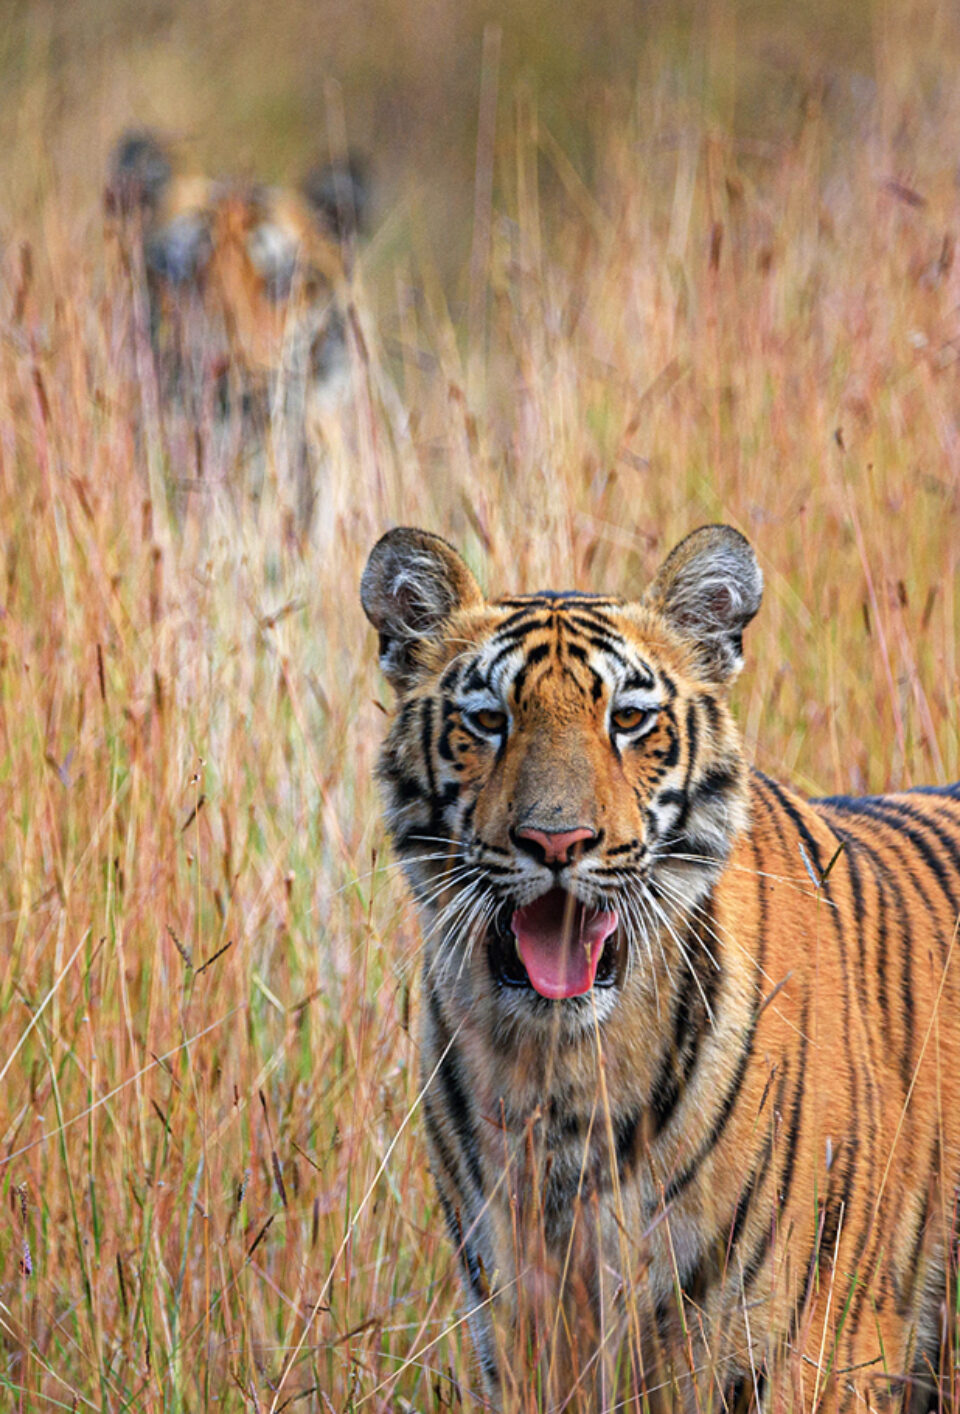 Splendid Safari at Bandhavgarh National Park